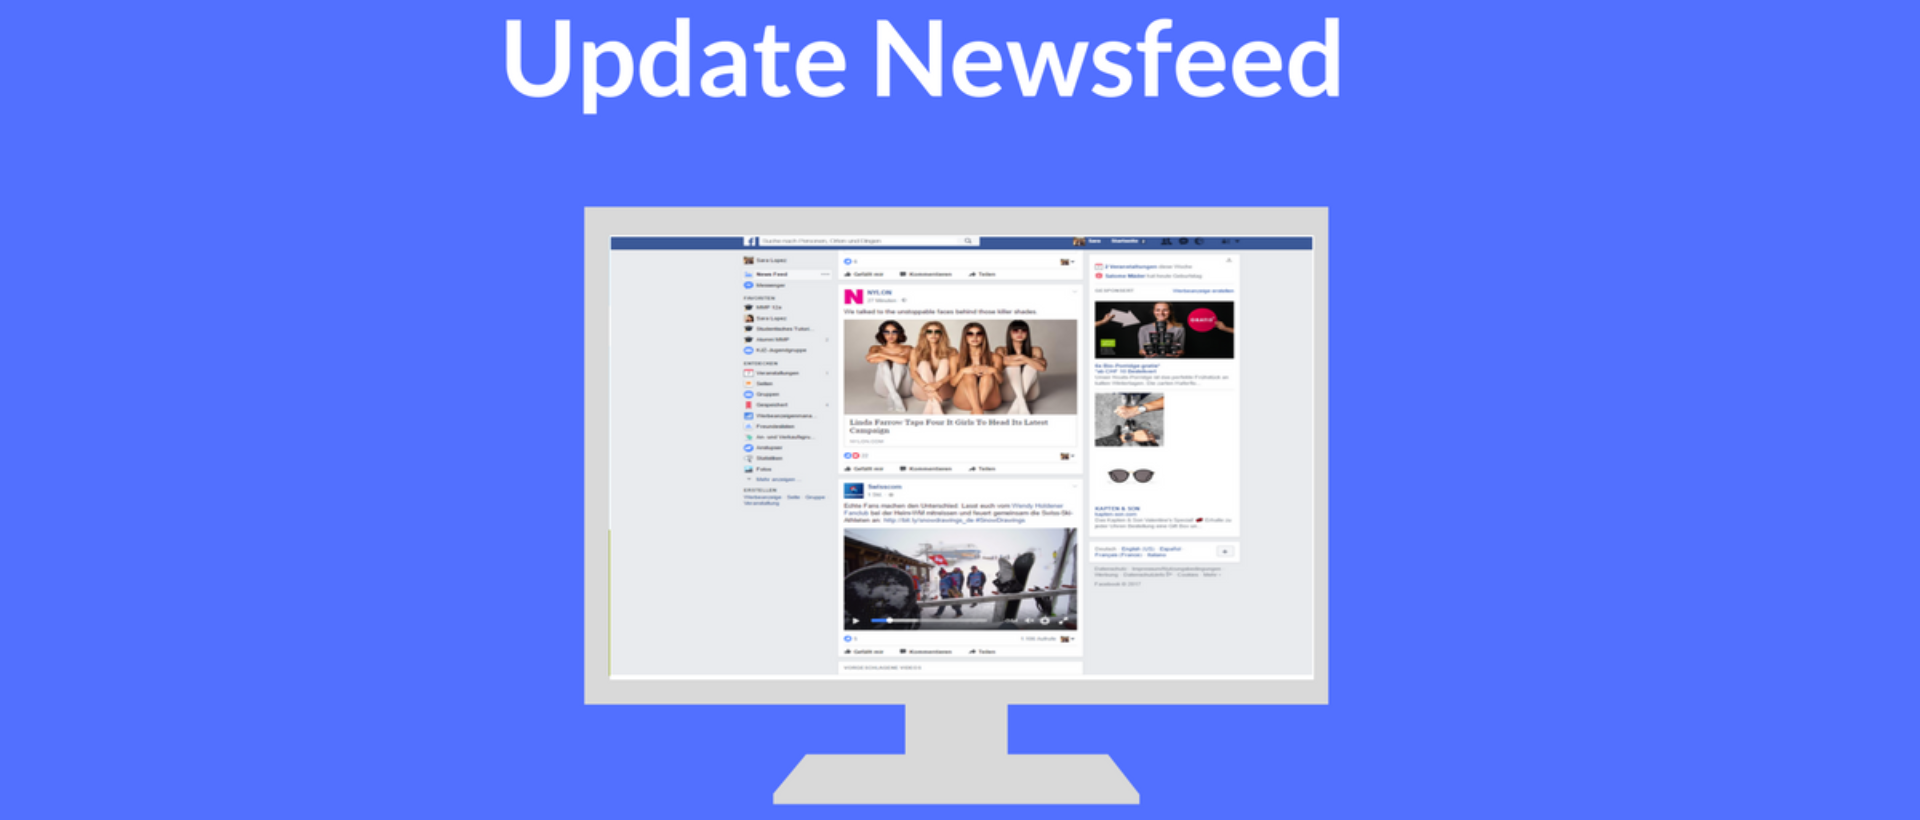 Update Newsfeed Facebook